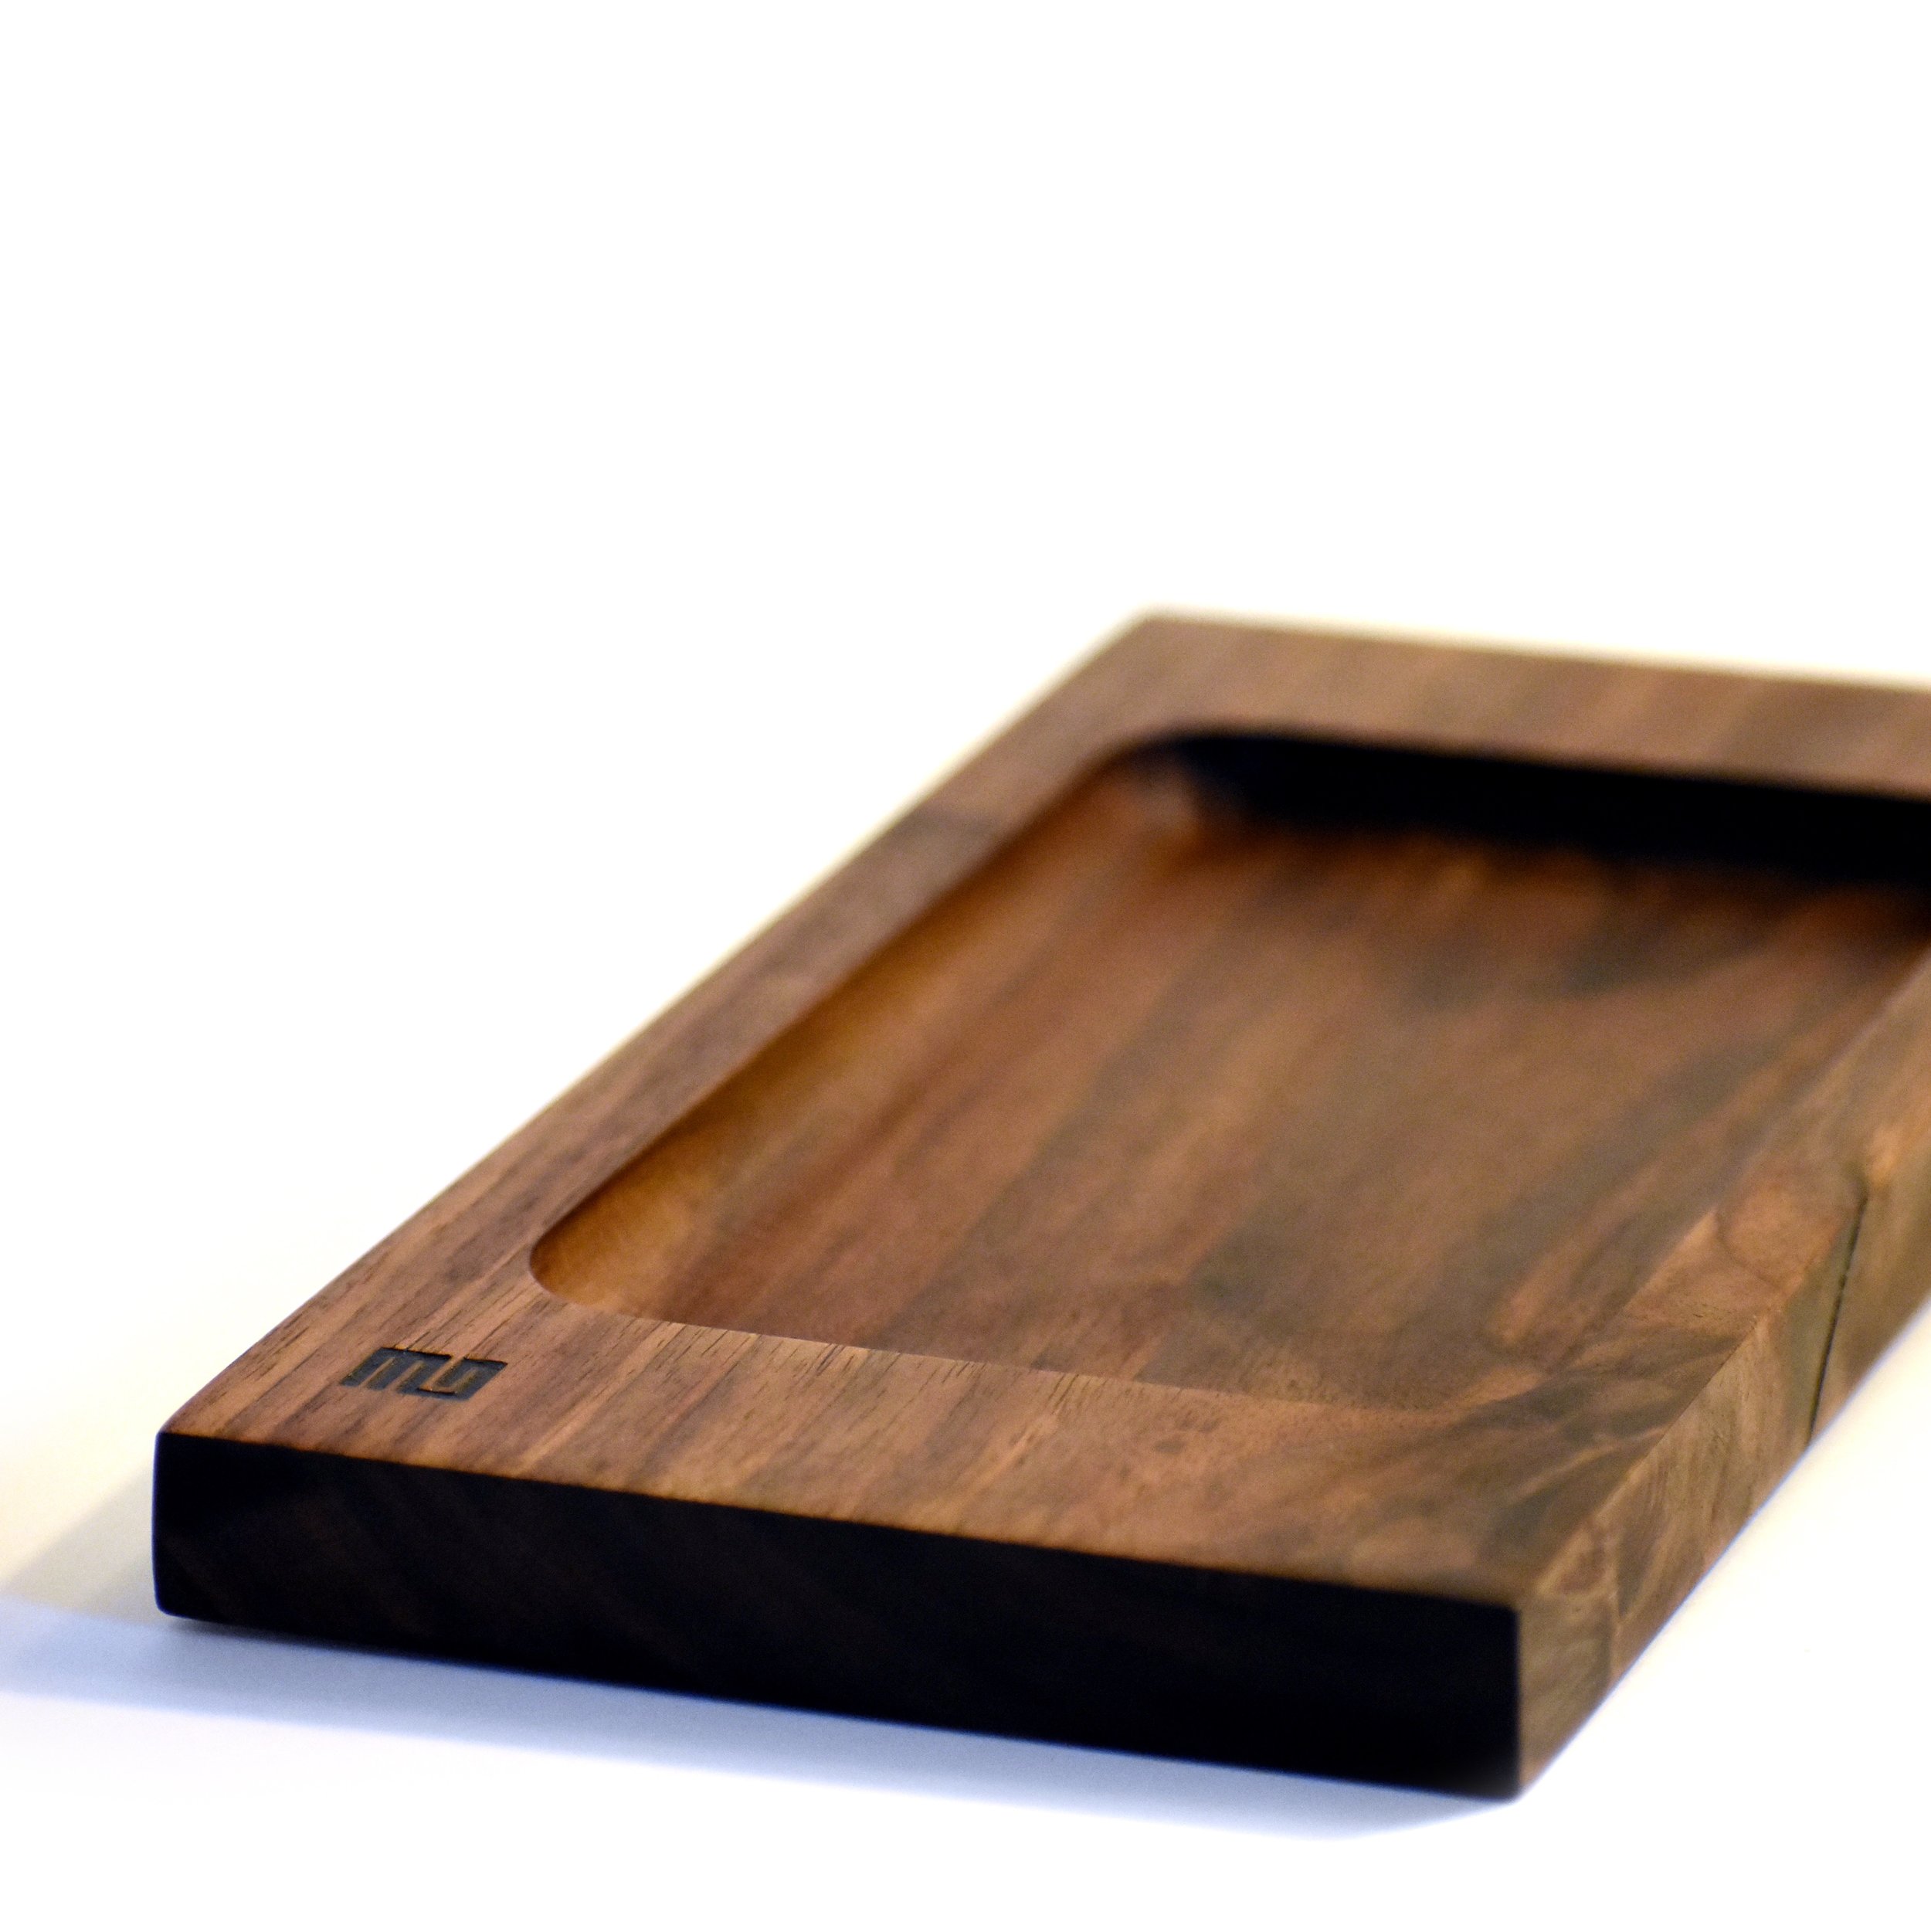 Custom hardwood rolling tray